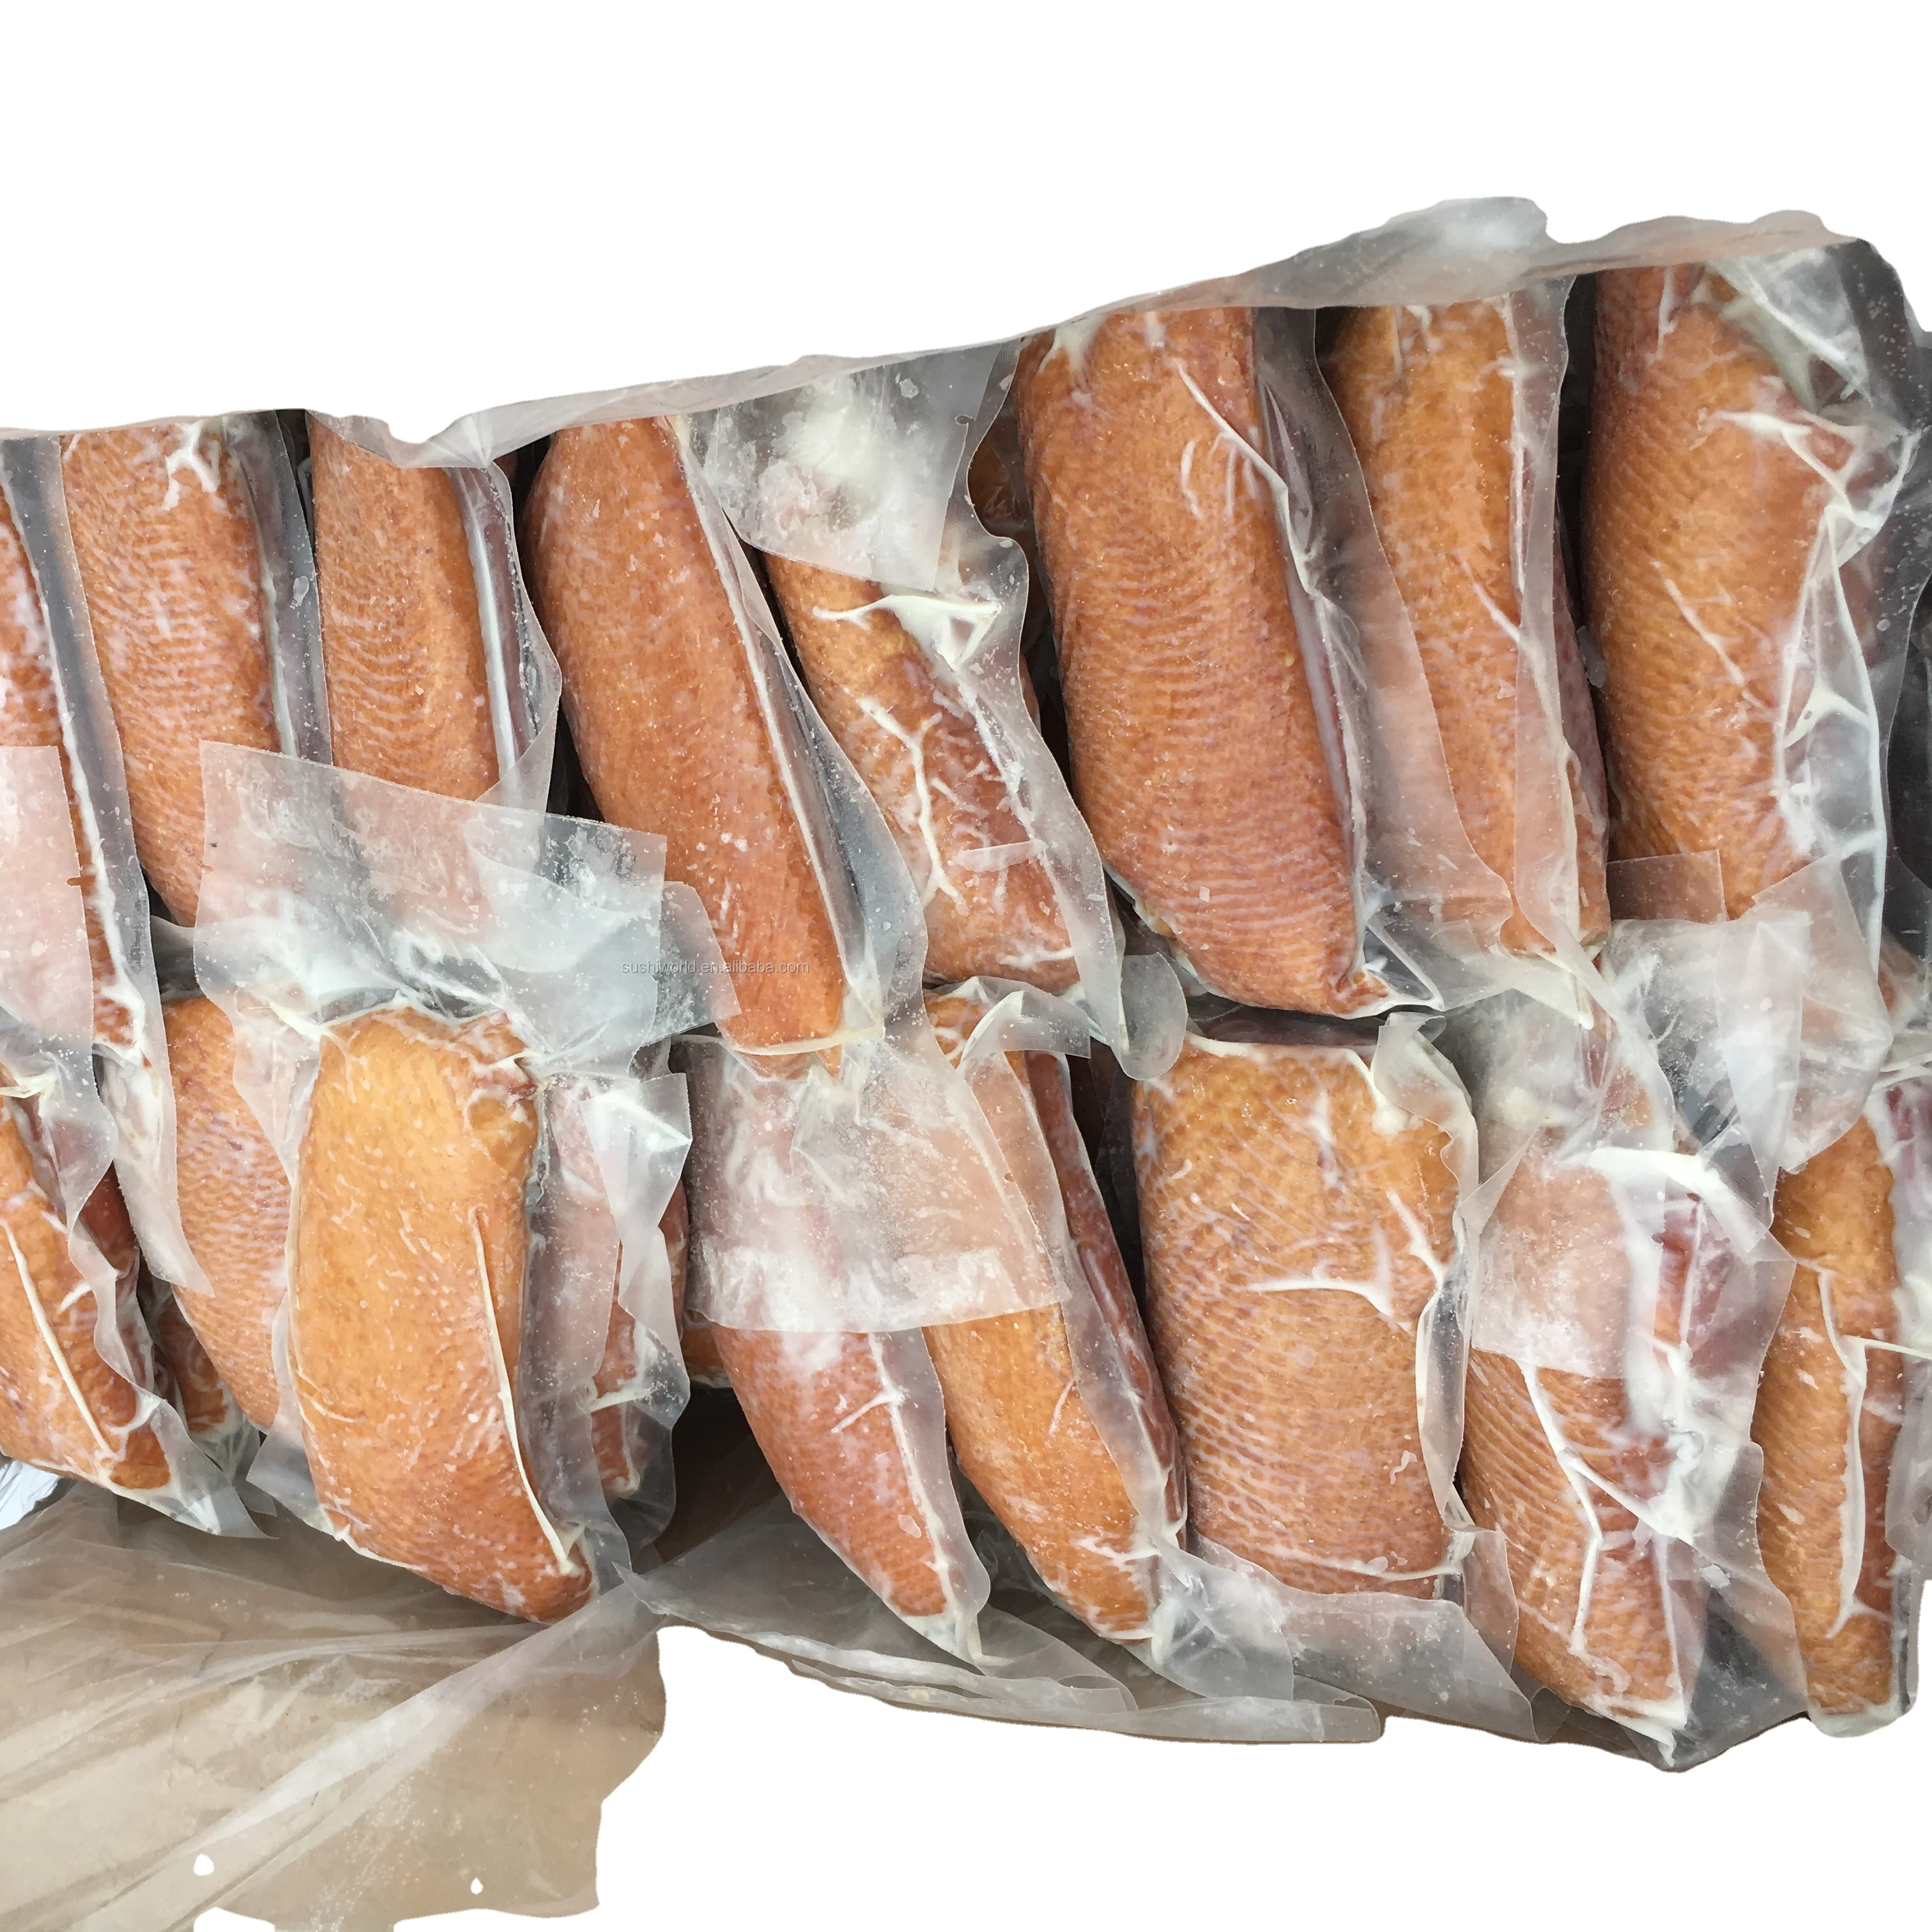 
2021 Factory direct wholesale duck meat frozen sliced smoked boneless whole duck  (62586163733)